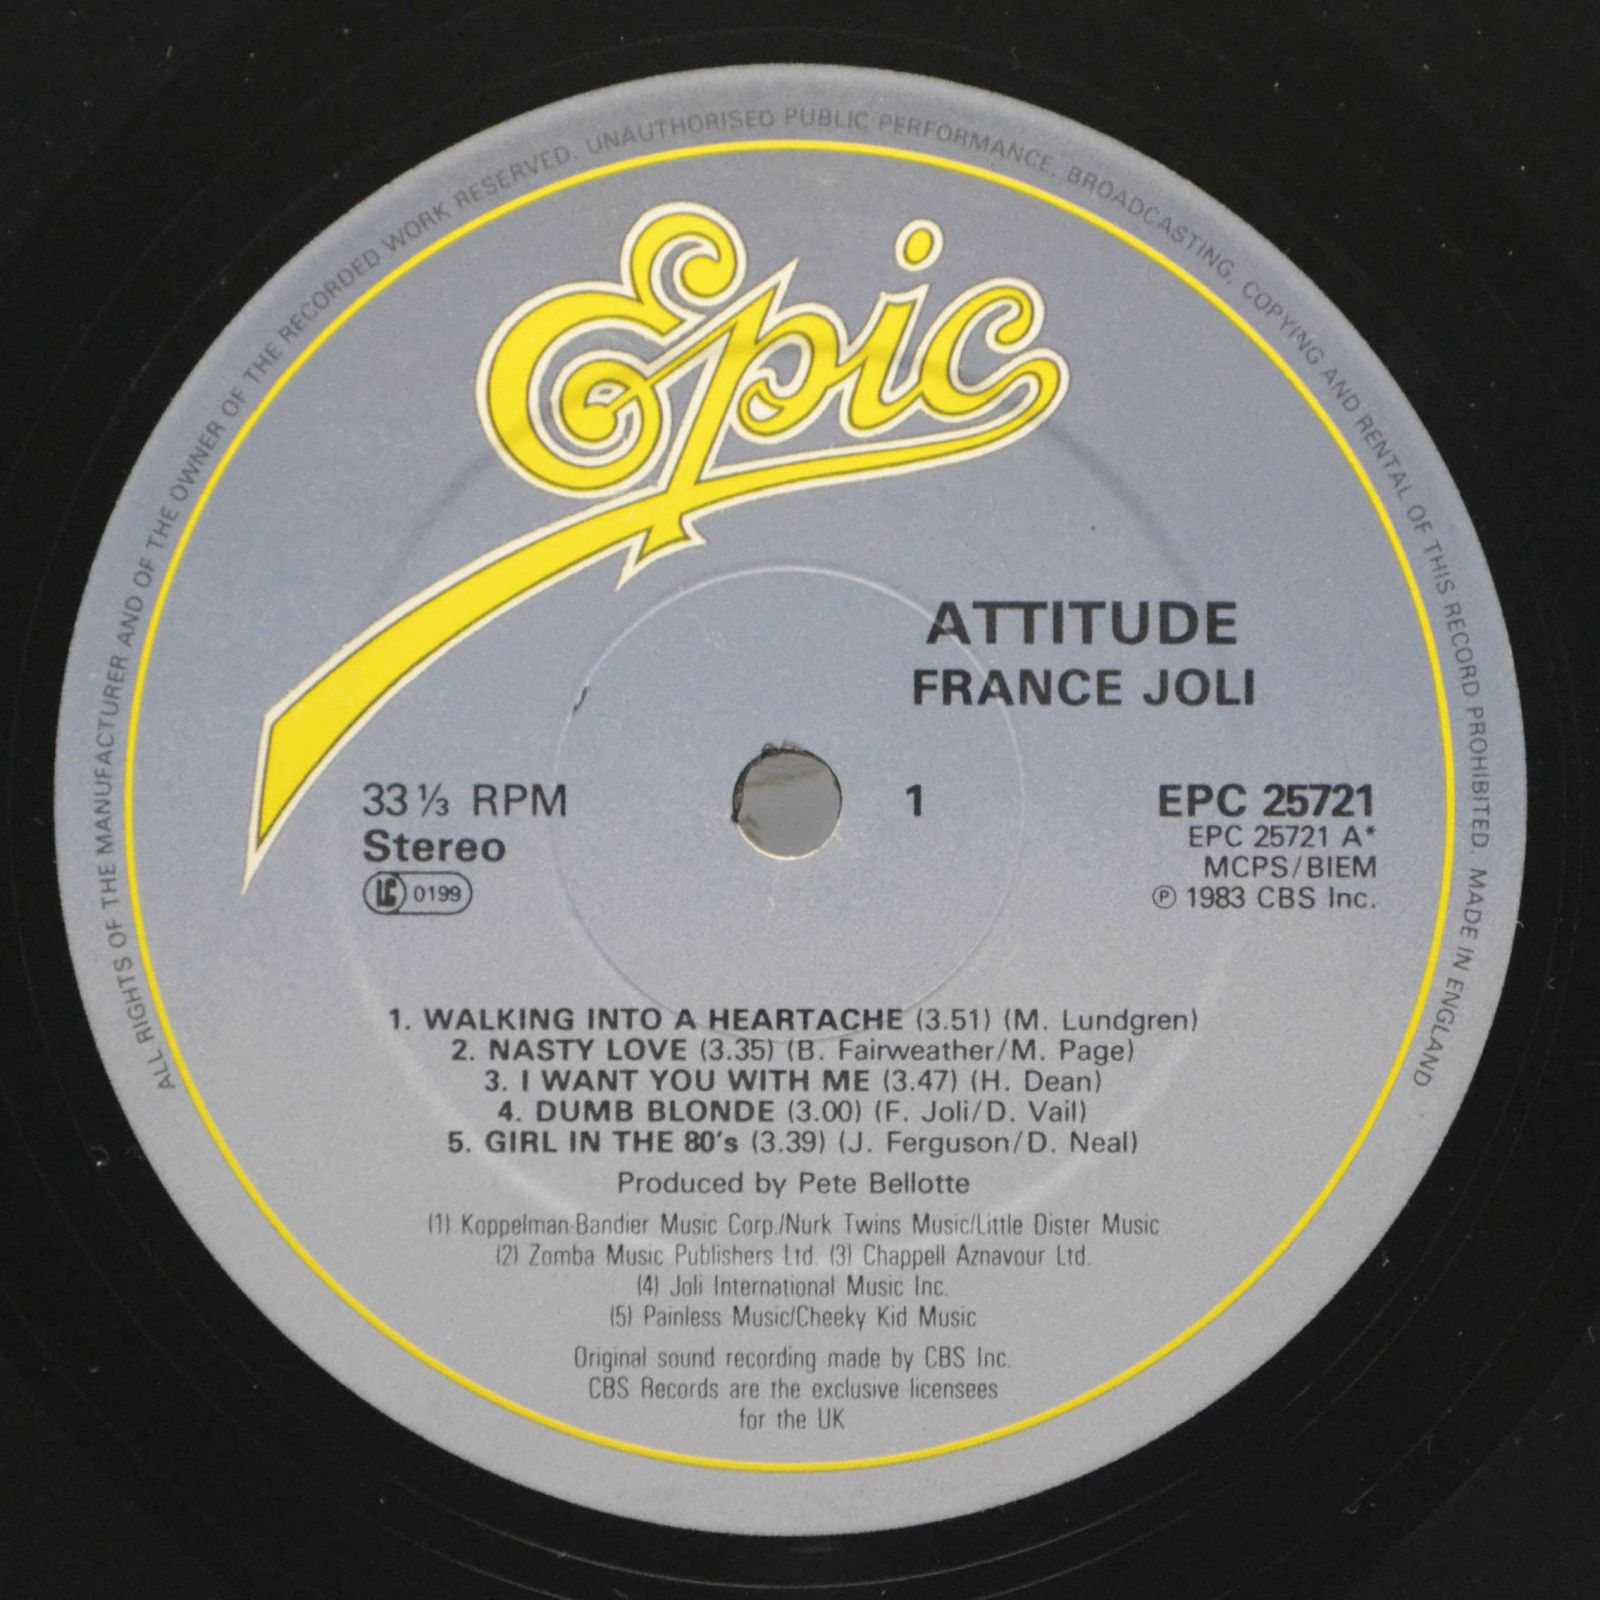 France Joli — Attitude, 1983